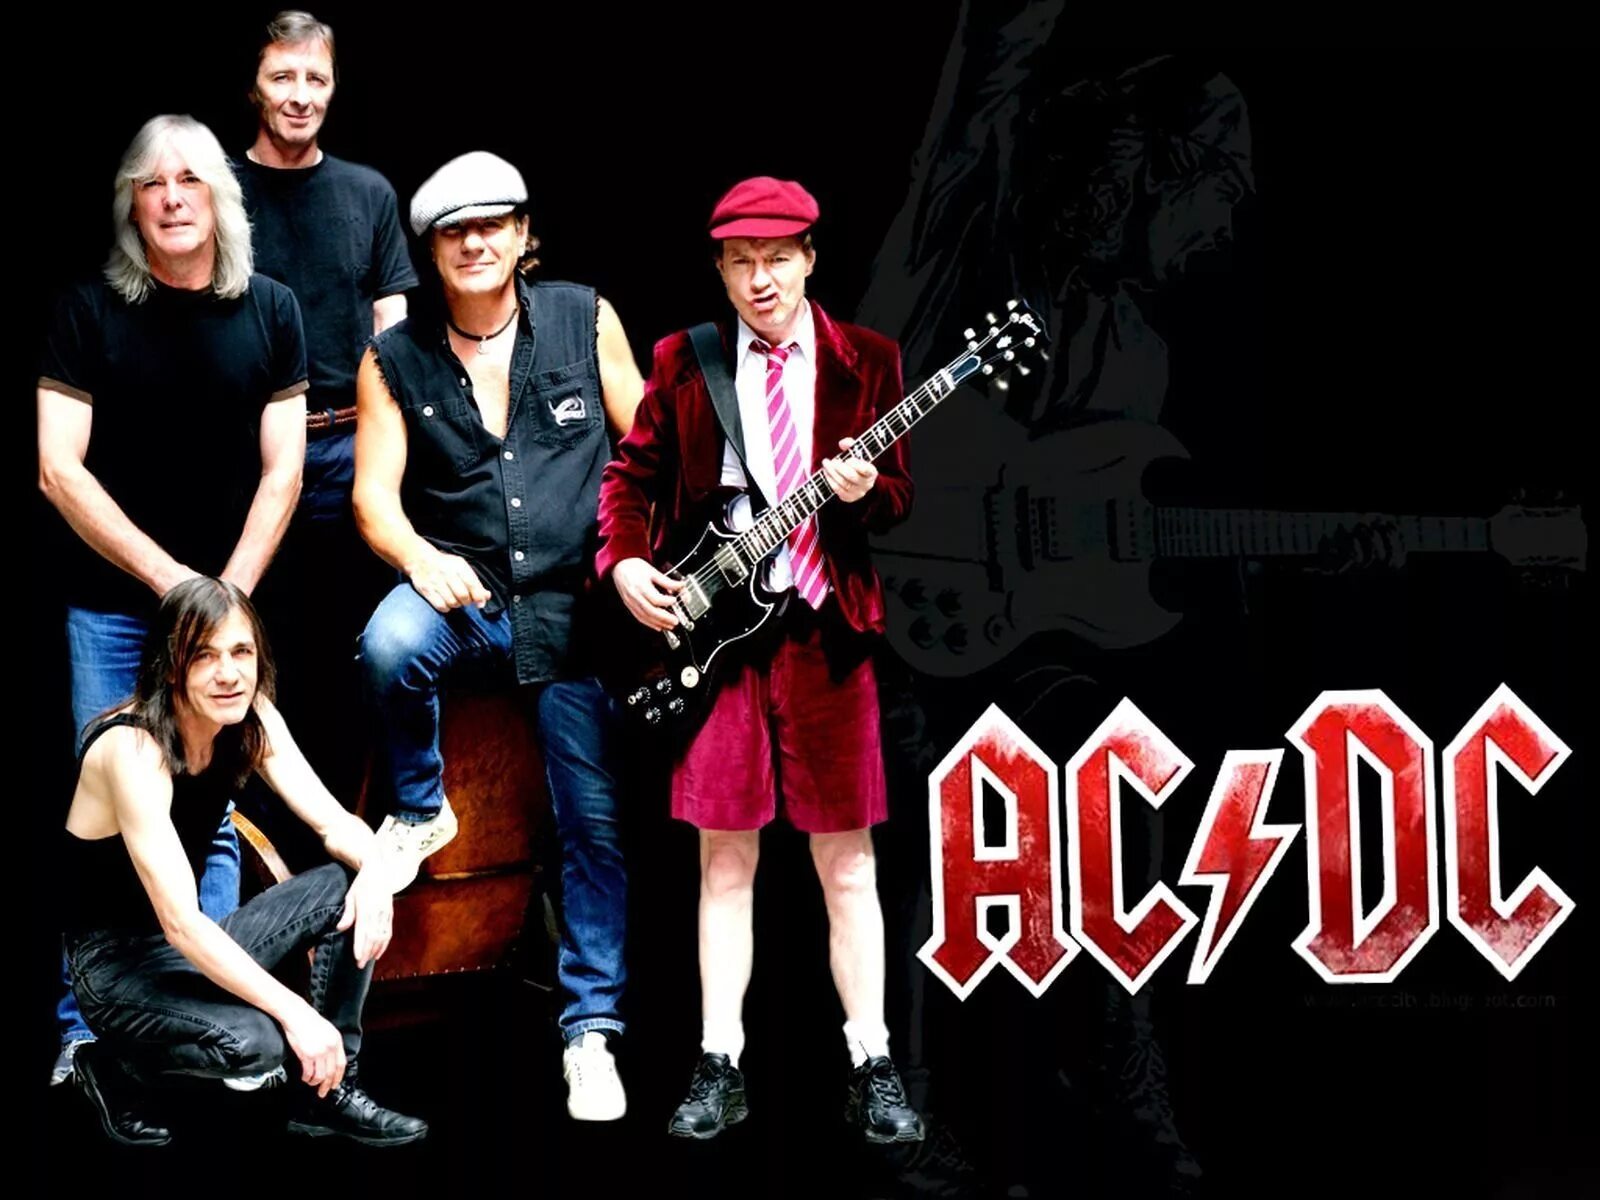 Группа тяжелые времена. Рок группа AC DC. Солист рок группы AC DC. AC DC 70s. AC/DC группа фото.